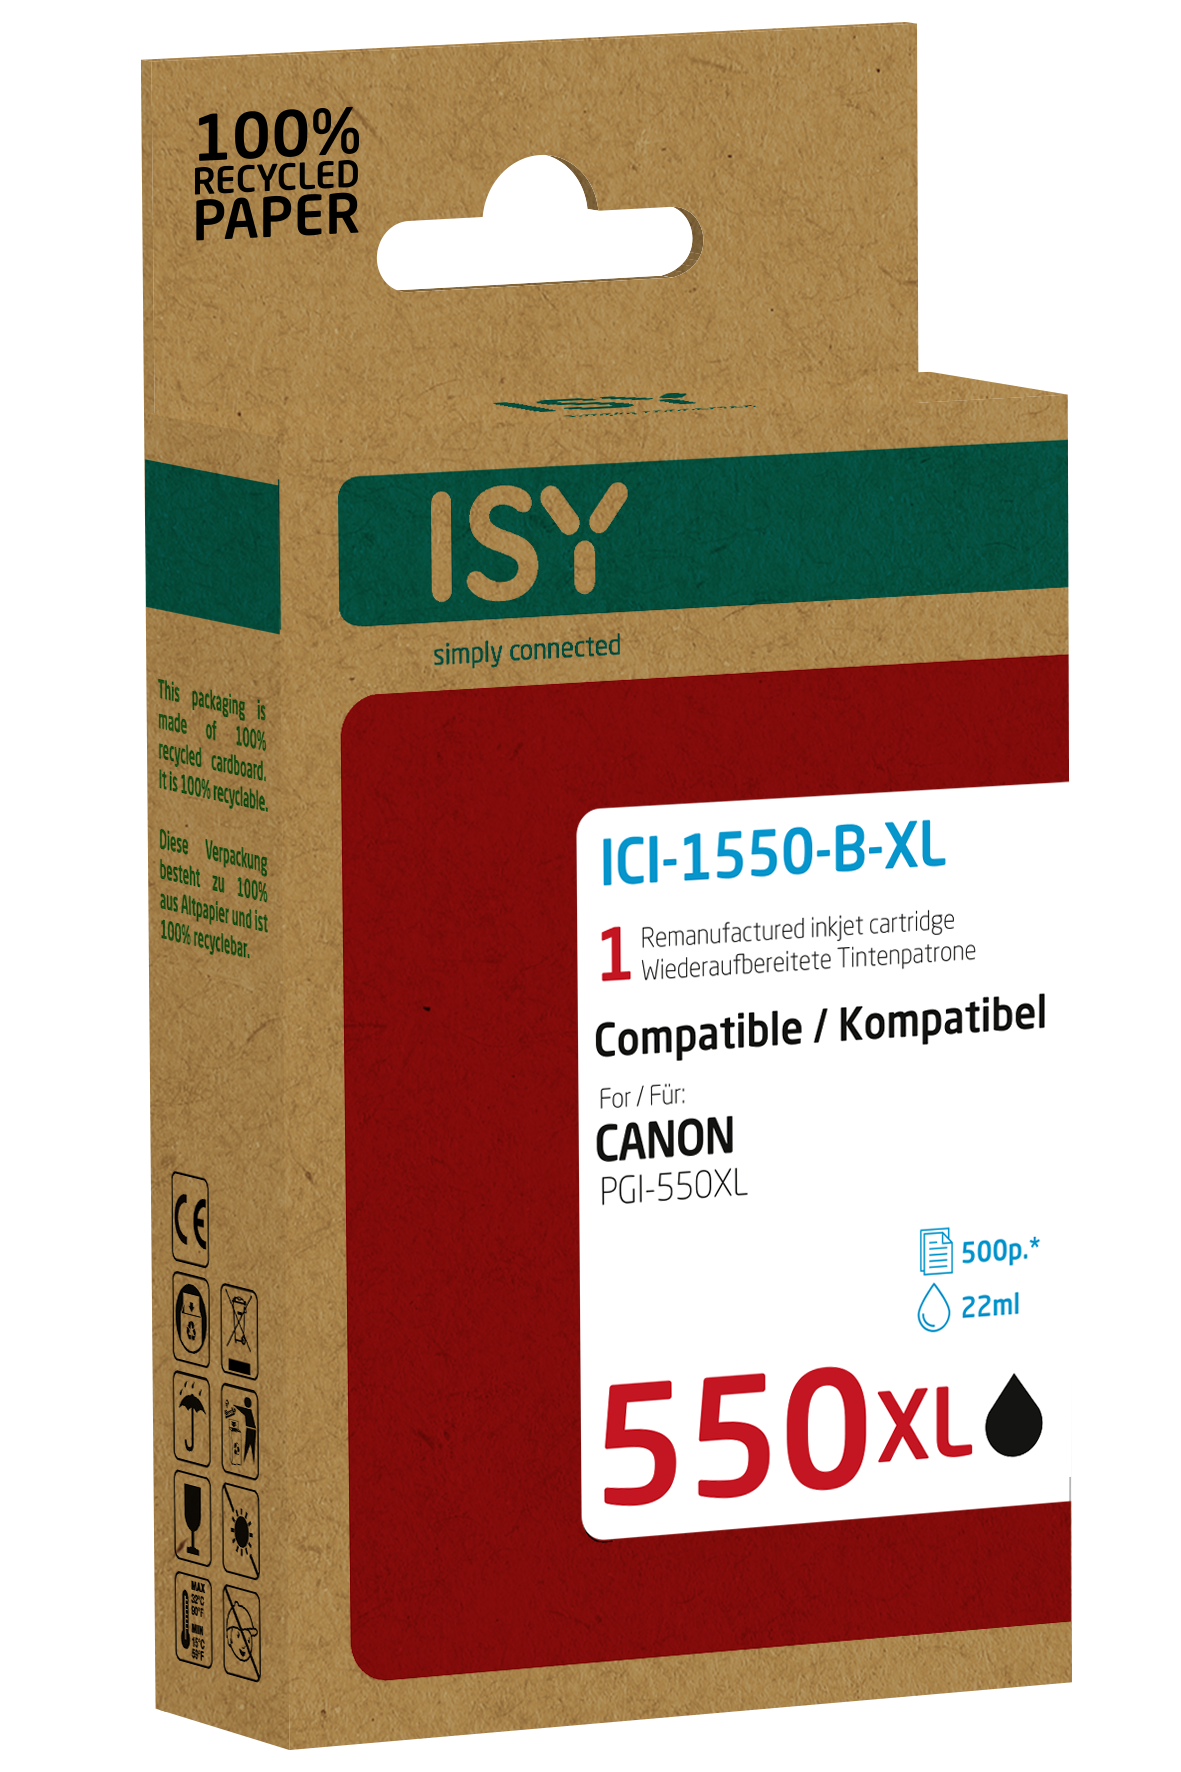 ICI-1550-B-XL Schwarz Tintenpatrone ISY